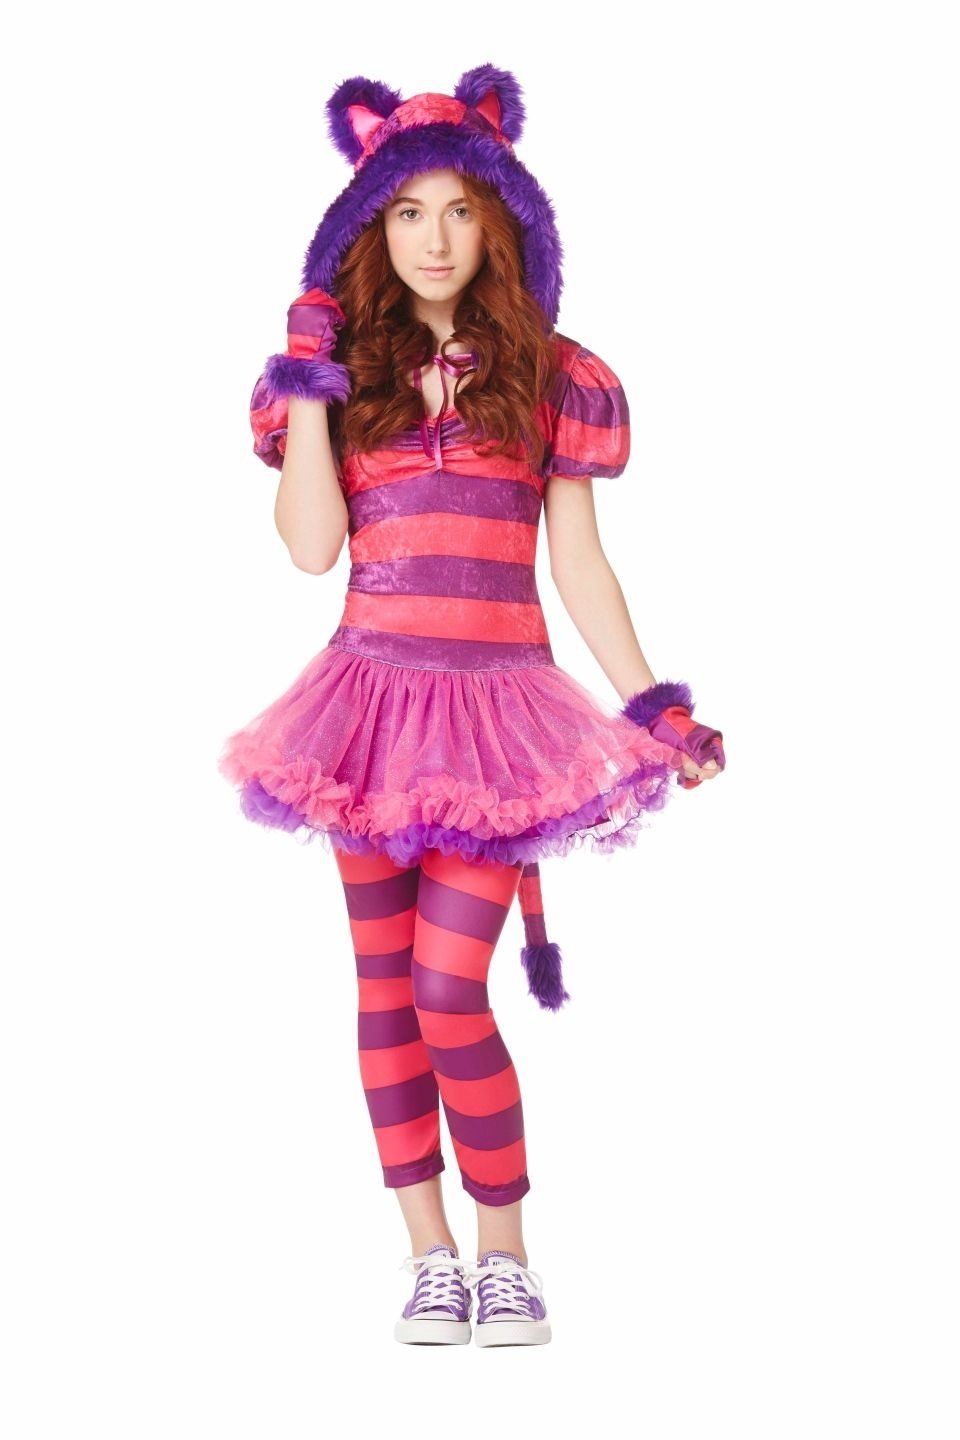 10 Unique Halloween Costume Ideas For Girls Age 10 halloween costume ideas for girls age 11 halloween costume ideas 2022